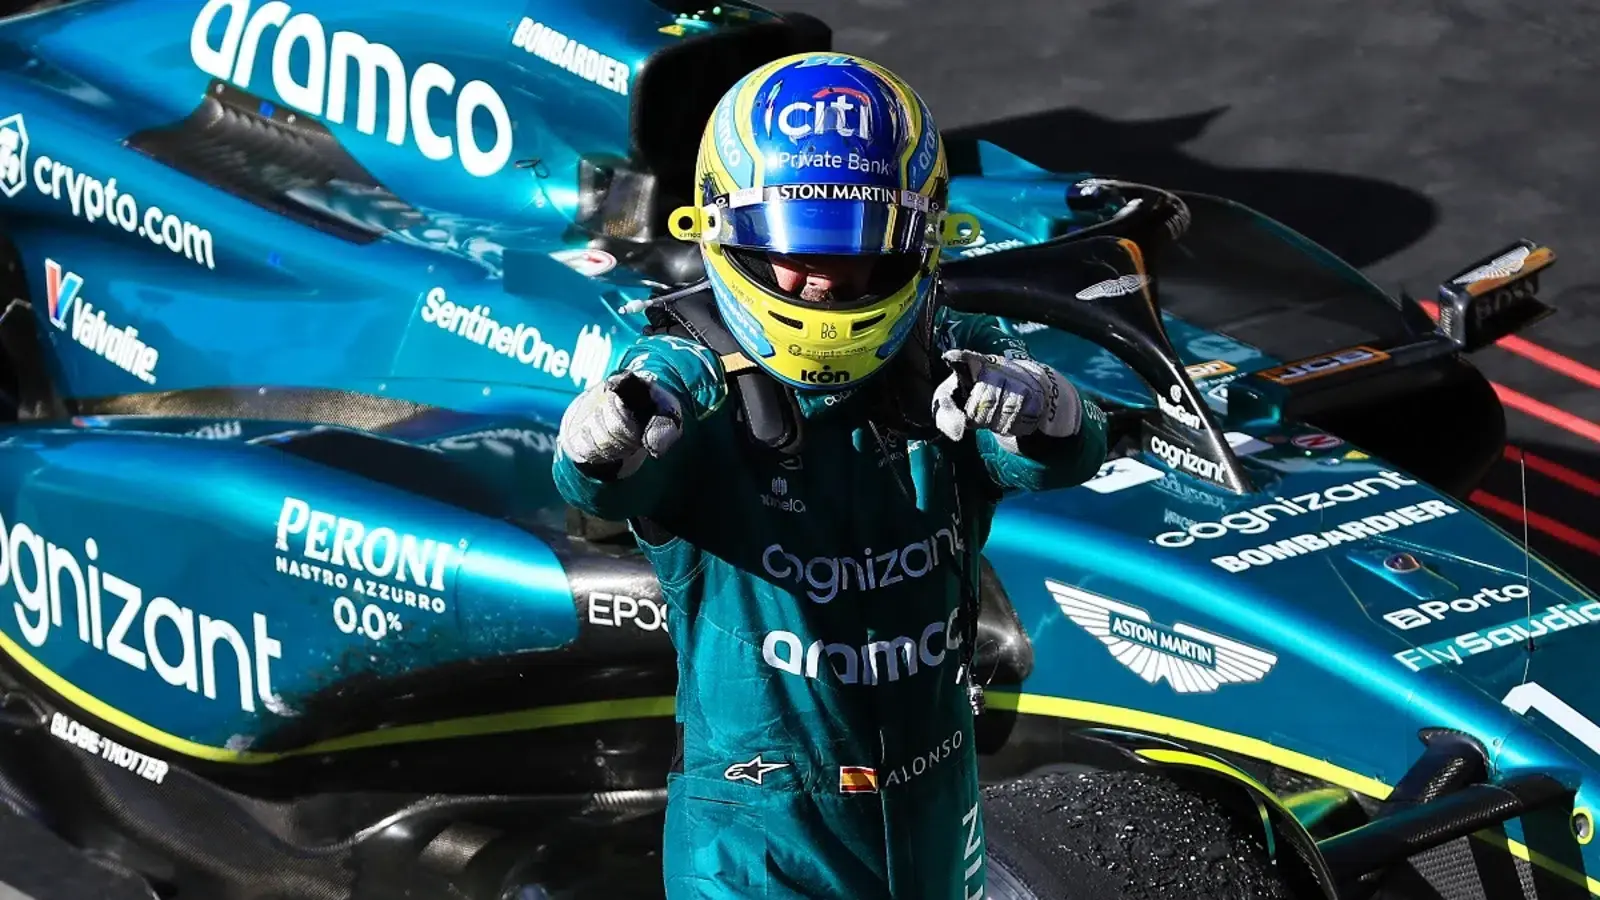 Aston Martin's aggressive plan to make Alonso champion
	

